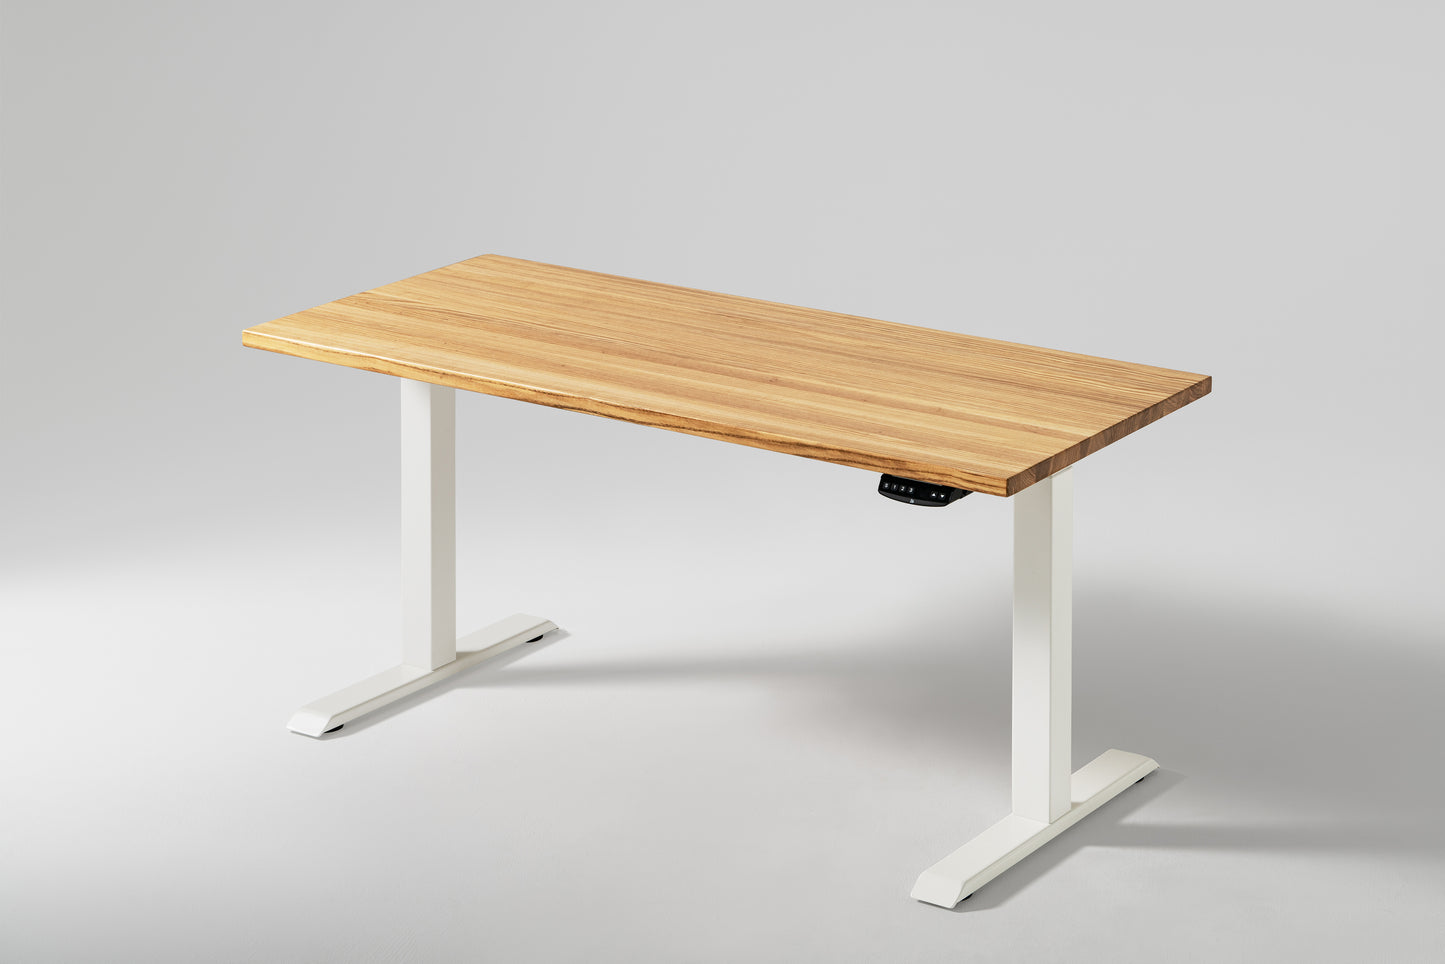 Elephant Desks - Height Adjustable Standing Desk - Abundance Series (Solid Wood and Flat Edges)